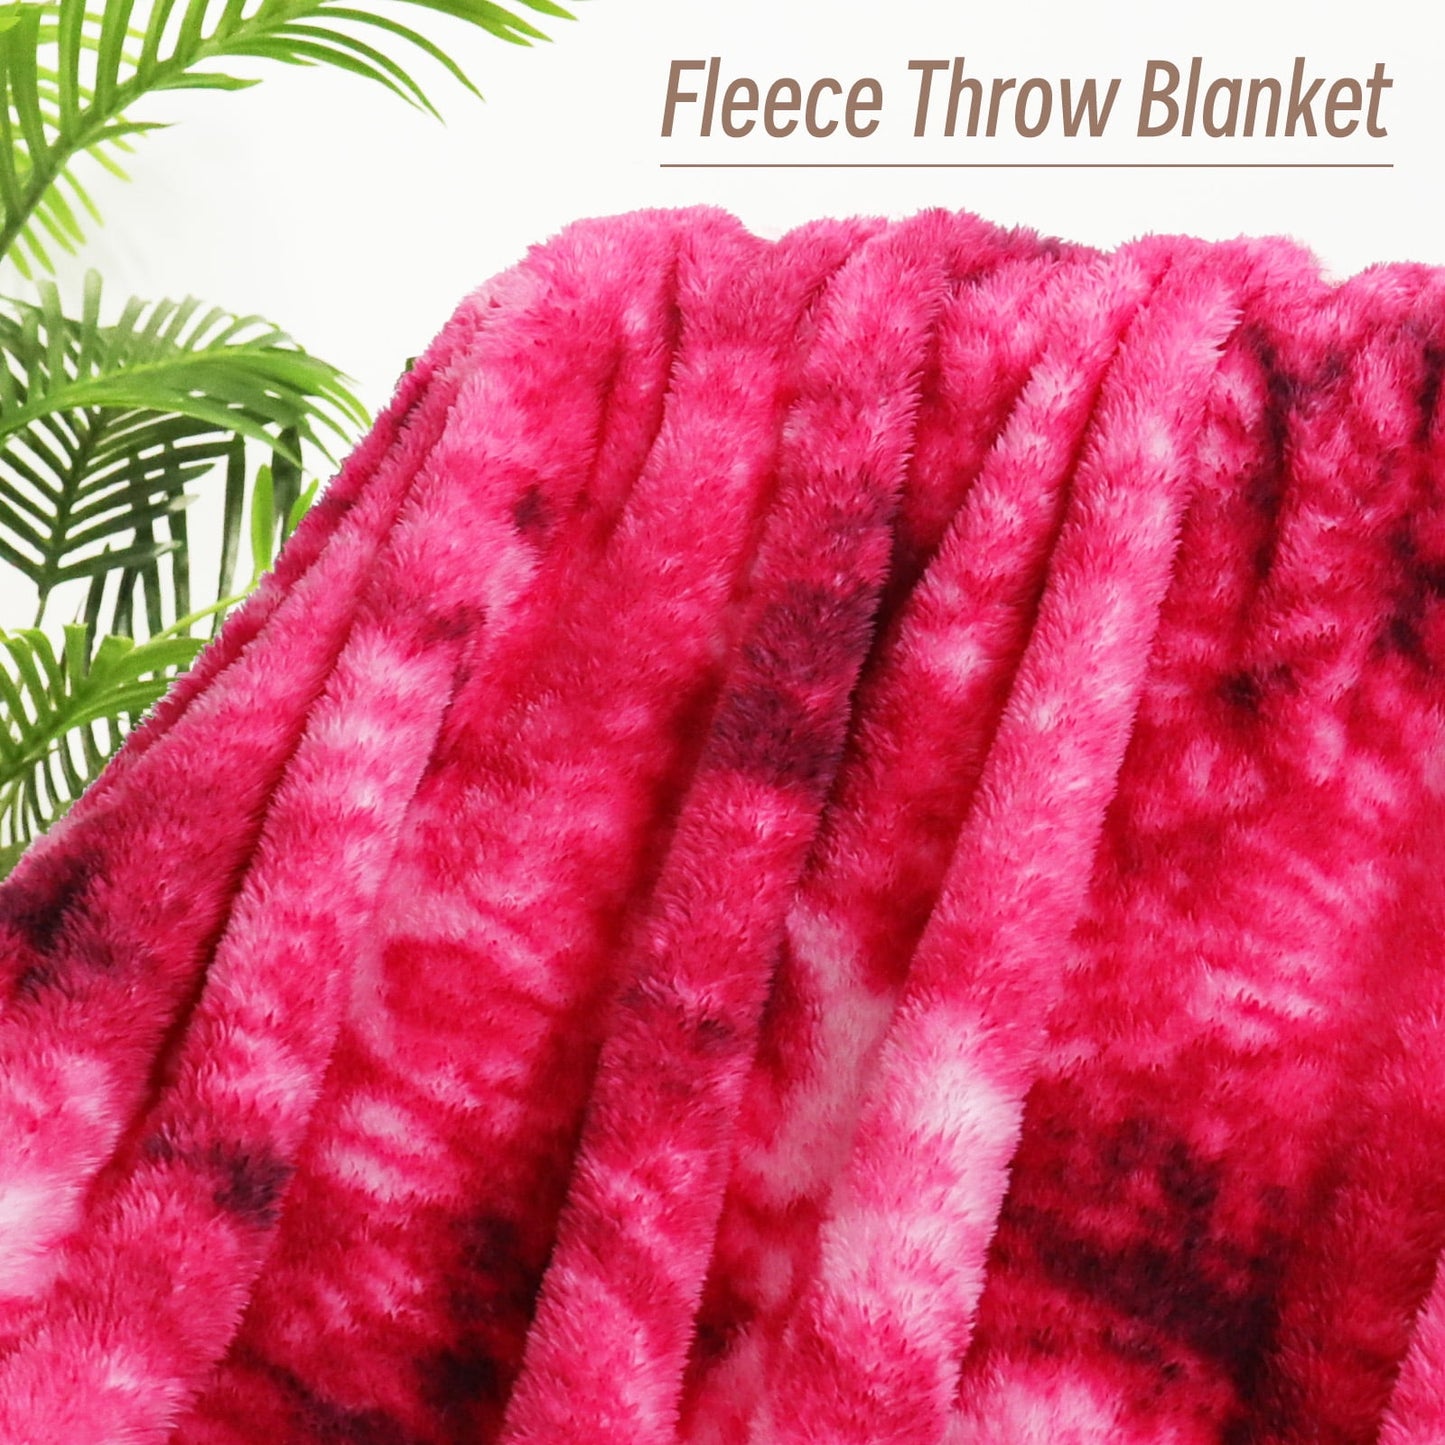 Exclusivo Mezcla Super Soft Tie Dye Blanket, Shaggy Plush Decorative Throw Blankets for Couch, Sofa, Bed, All Seasons (50x70 inches, Tie Dye Fuchsia)